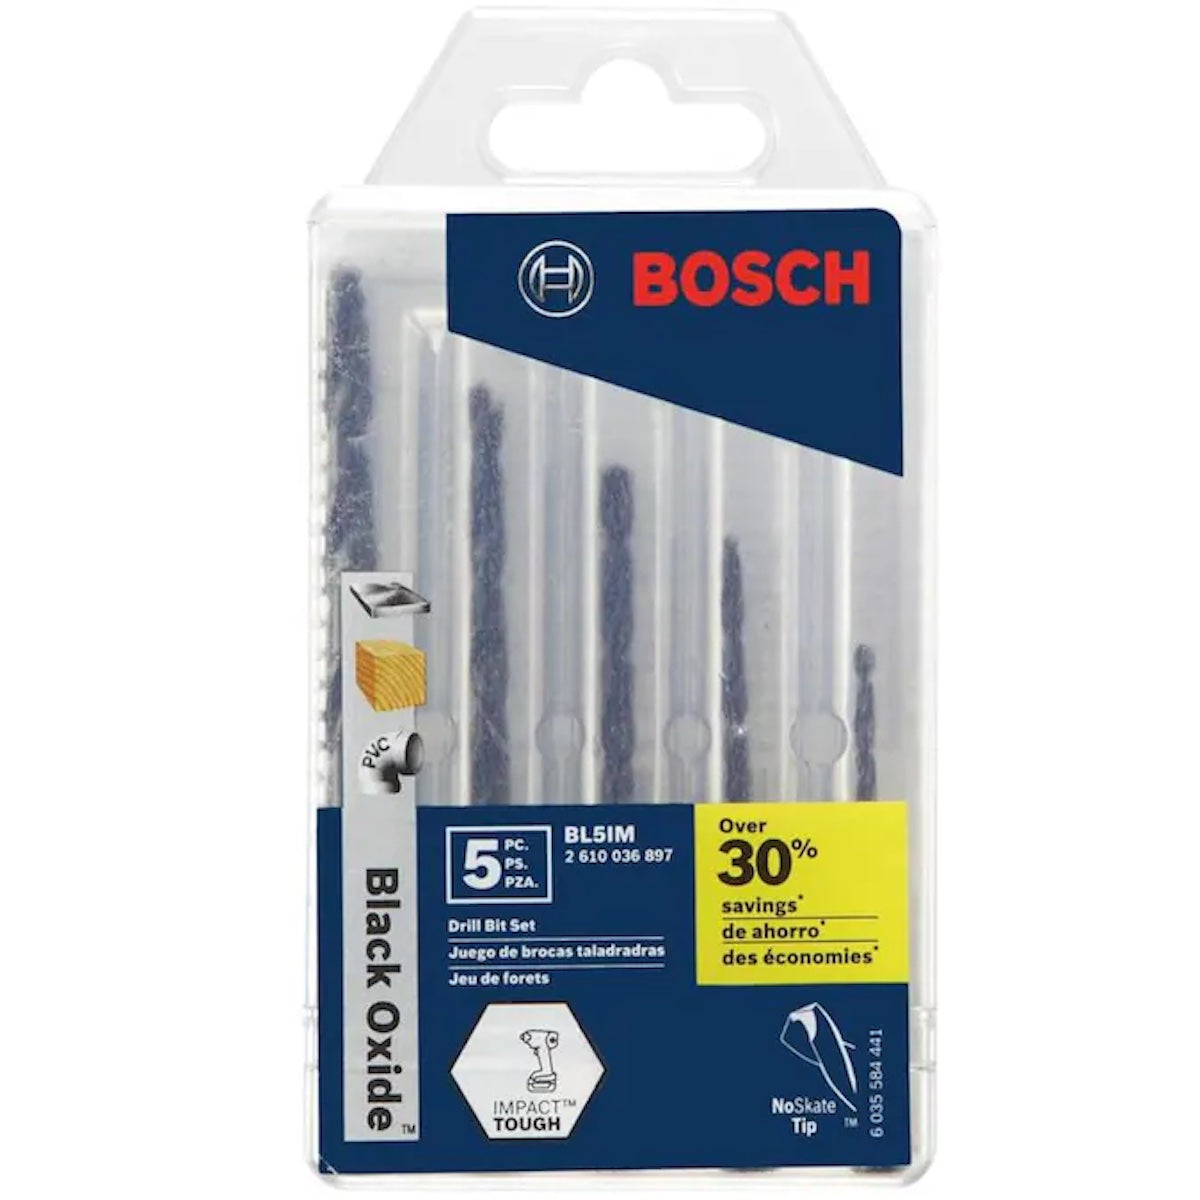 Bosch 5 Piece Impact Tough Black Oxide Drill Bit Set (BL5IM)